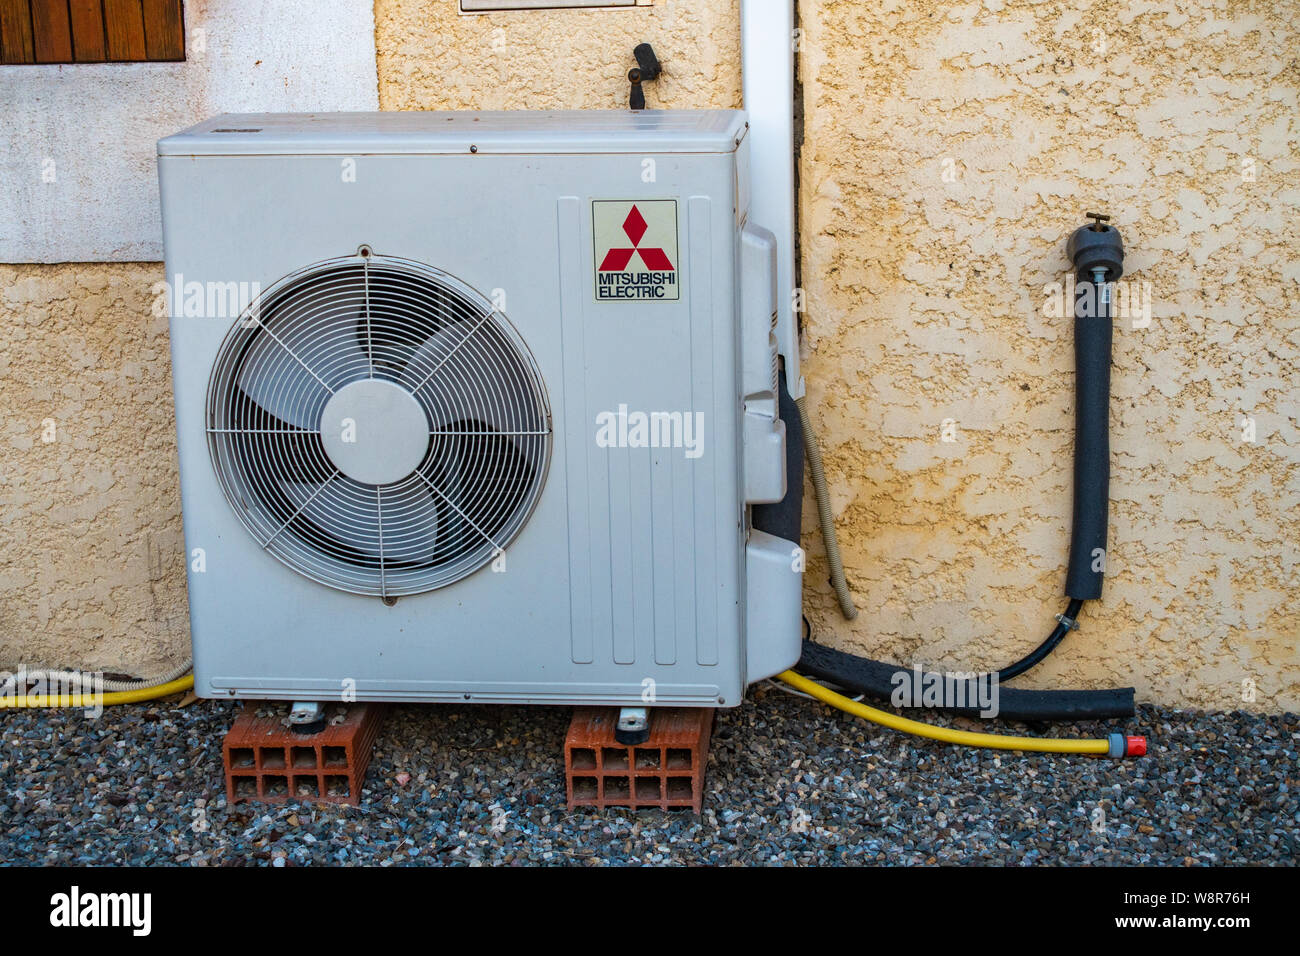 Mitsubishi air conditioning exterior unit standing on 2 bricks Stock Photo  - Alamy